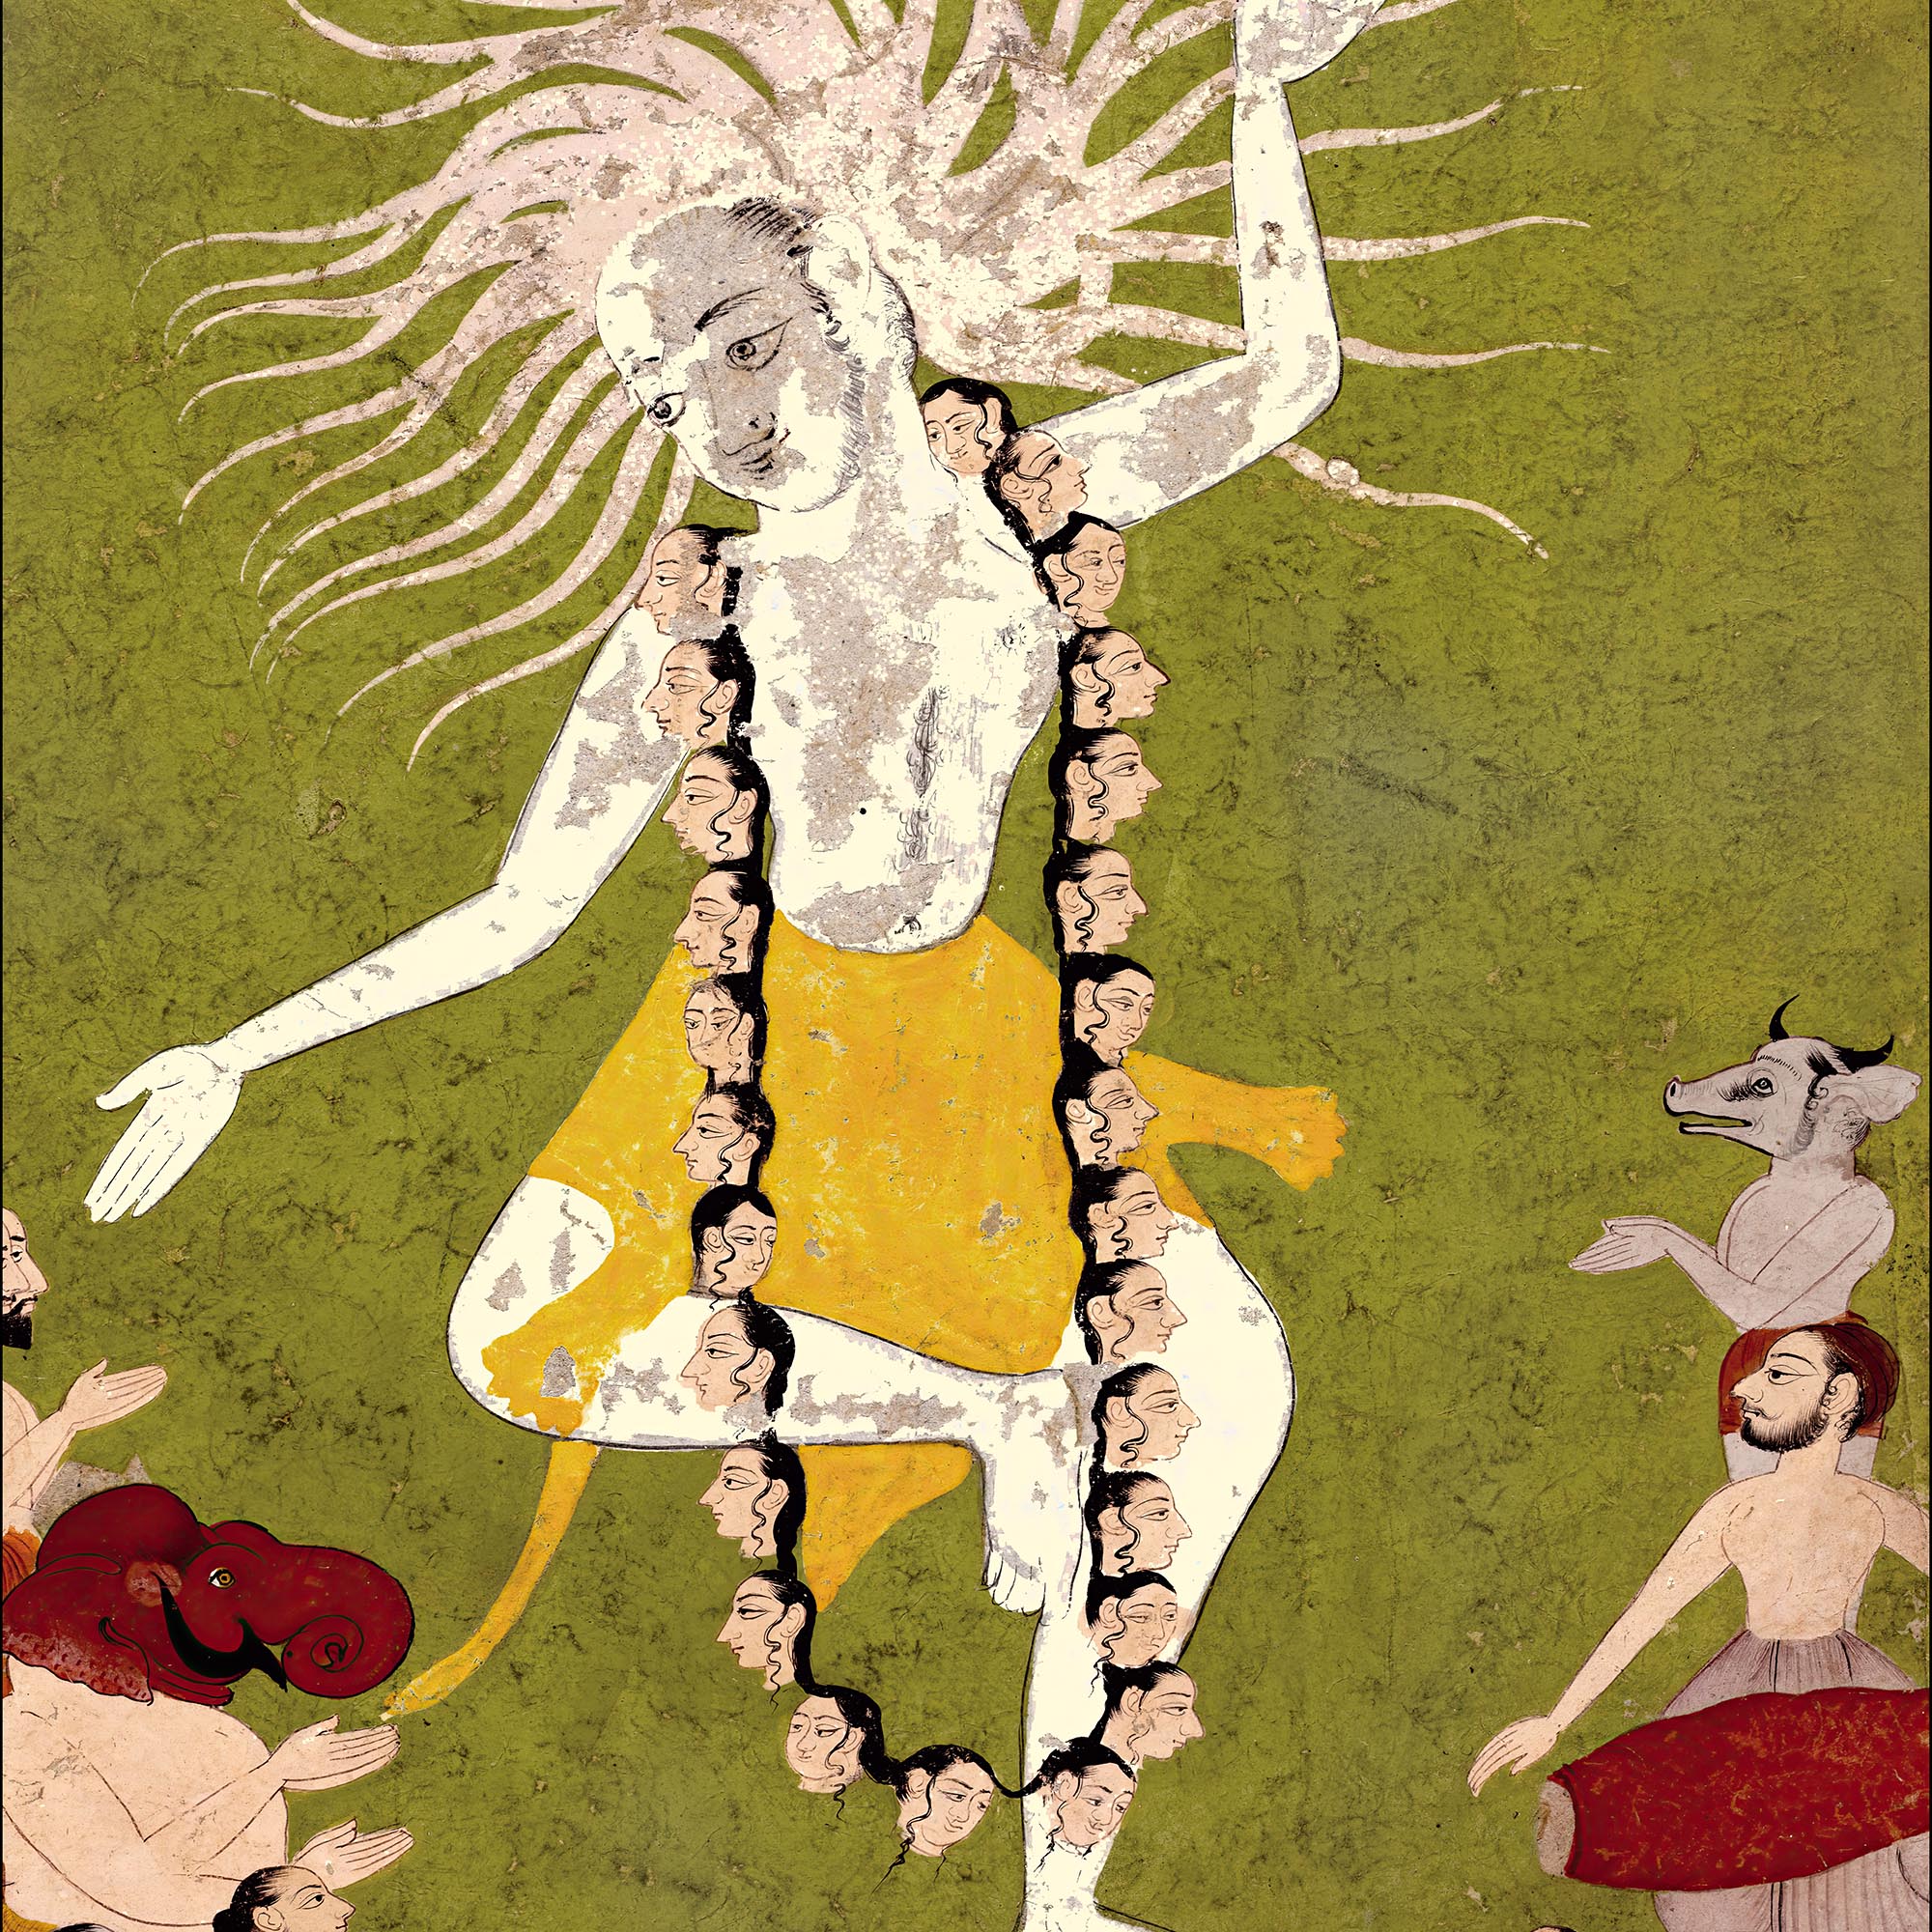 Fine art A4 Portrait / Black Frame Lord Shiva in His Ferocious Aspect as Mahakala Dancing | Fine Art Print with Thangka-Style Hanger